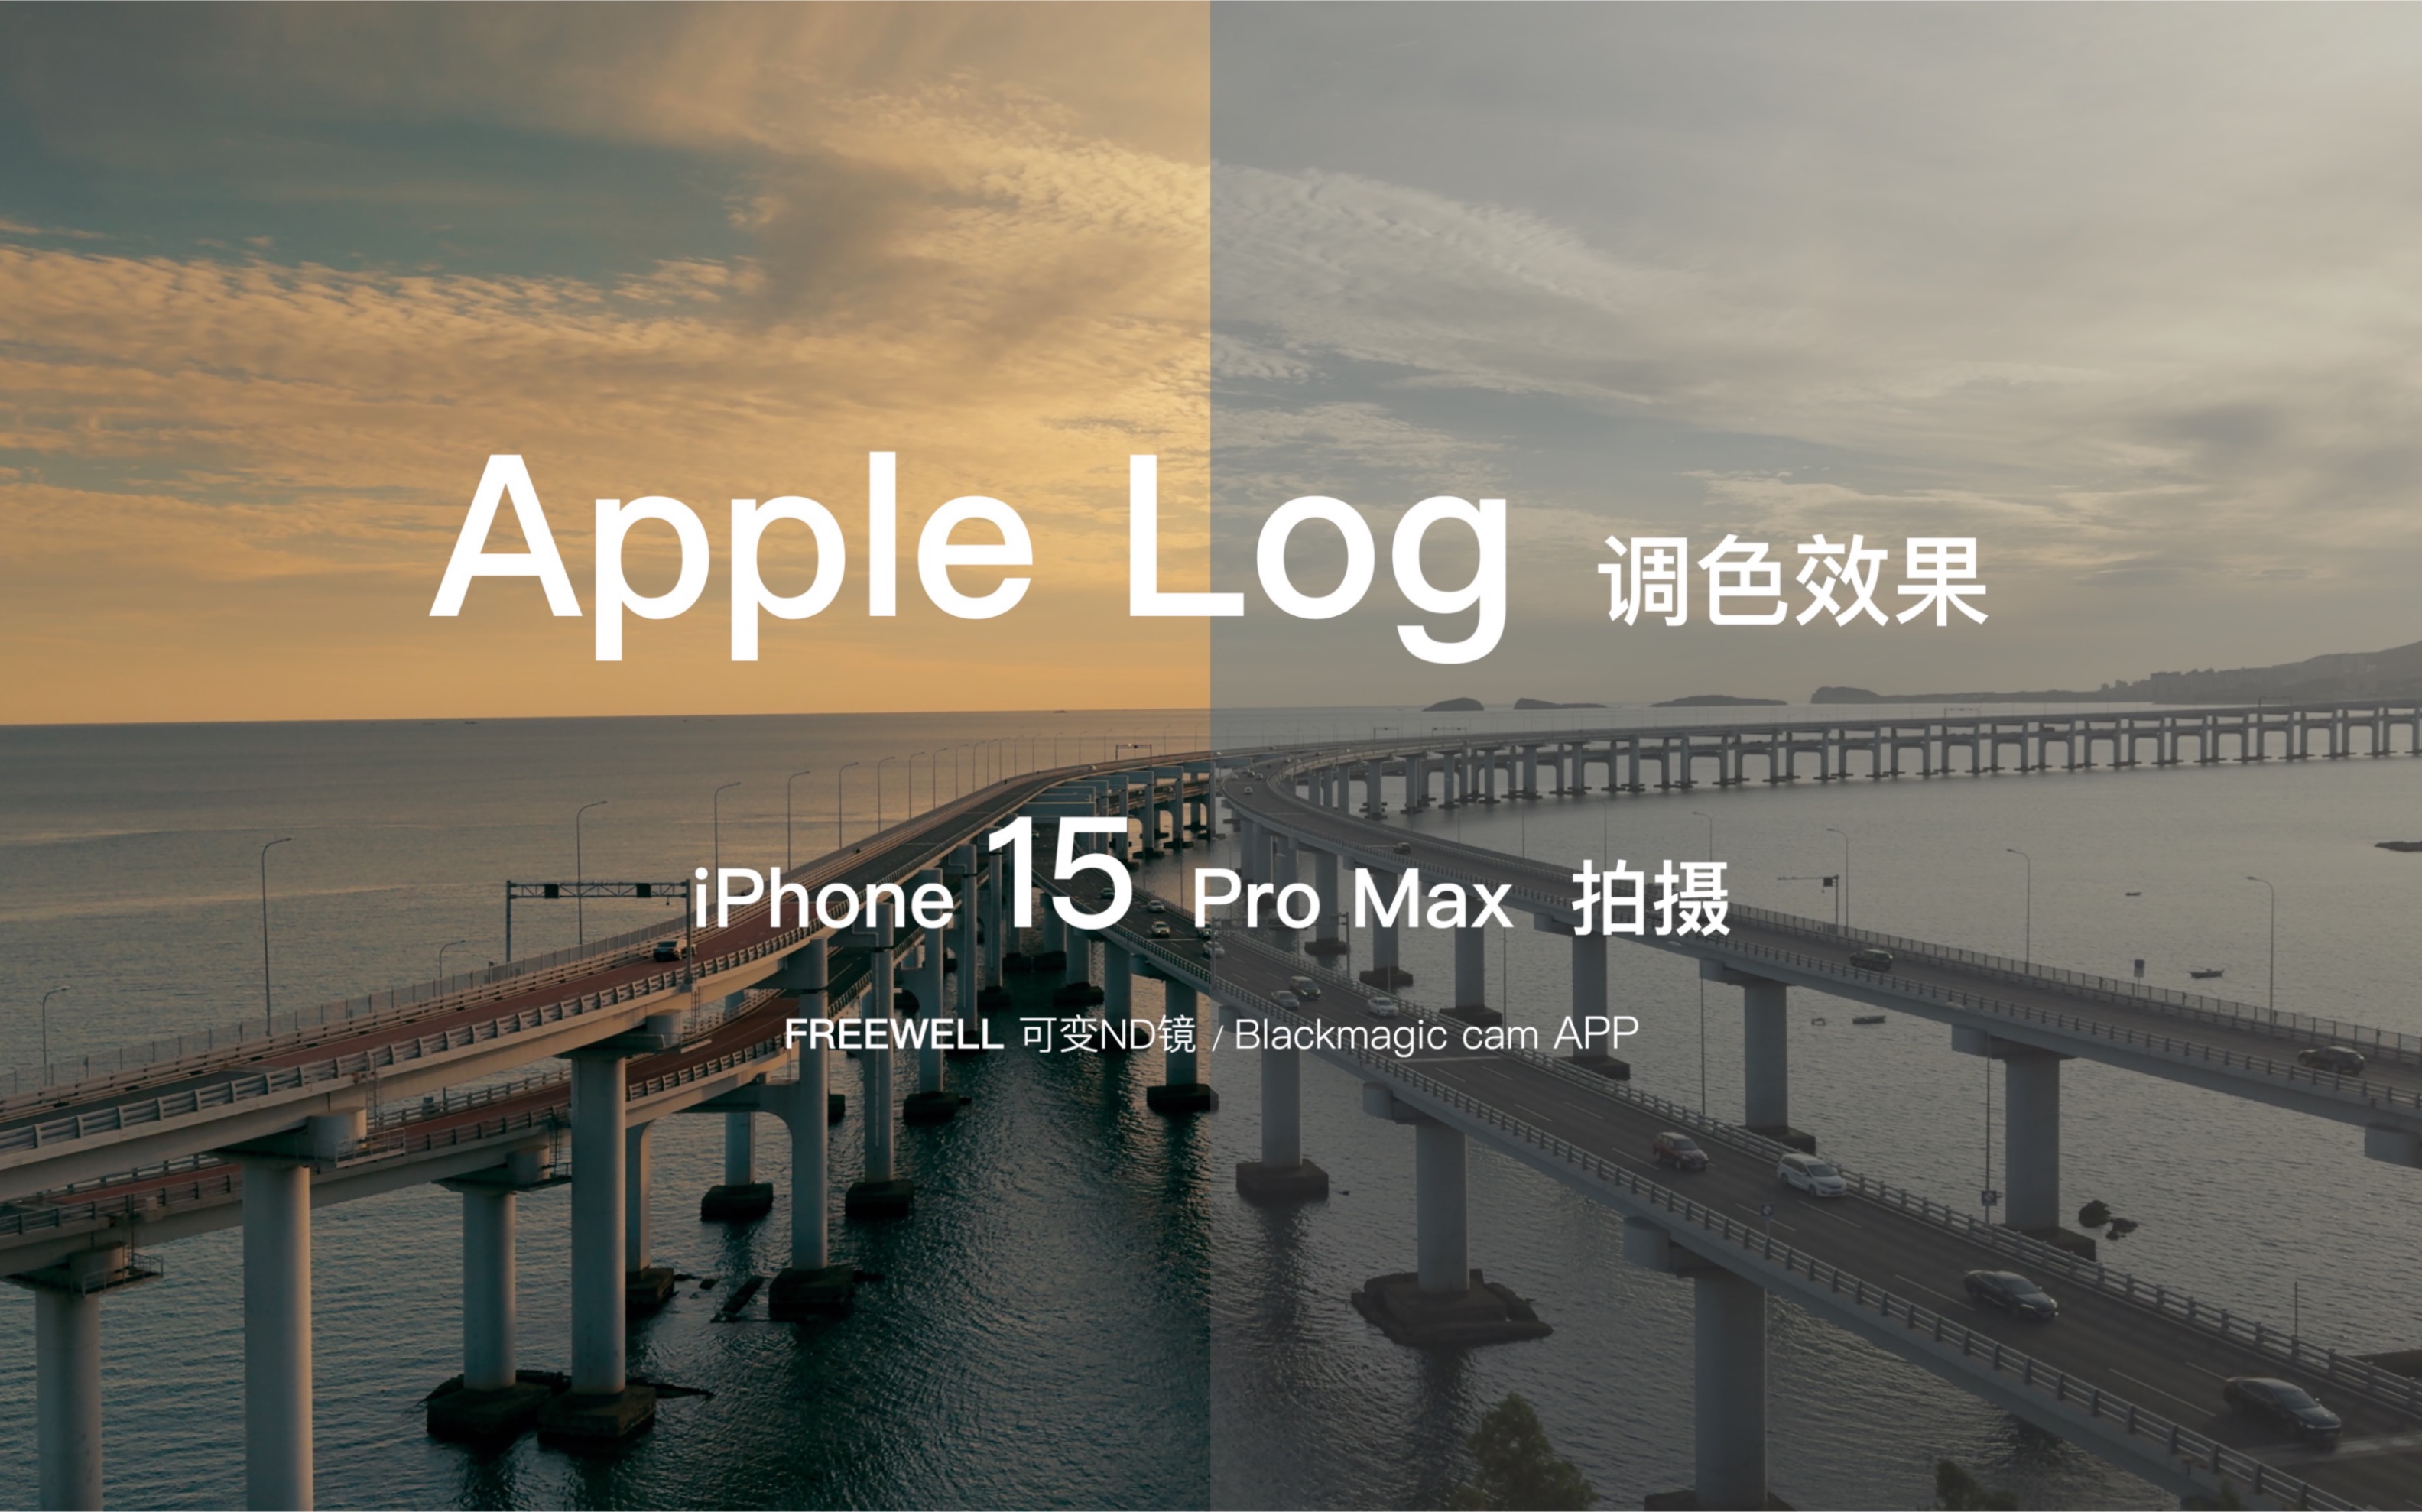 iPhone 15 Pro Max 拍摄 强大的Apple Log，不能说碾压入门相机，但也是伯仲之间